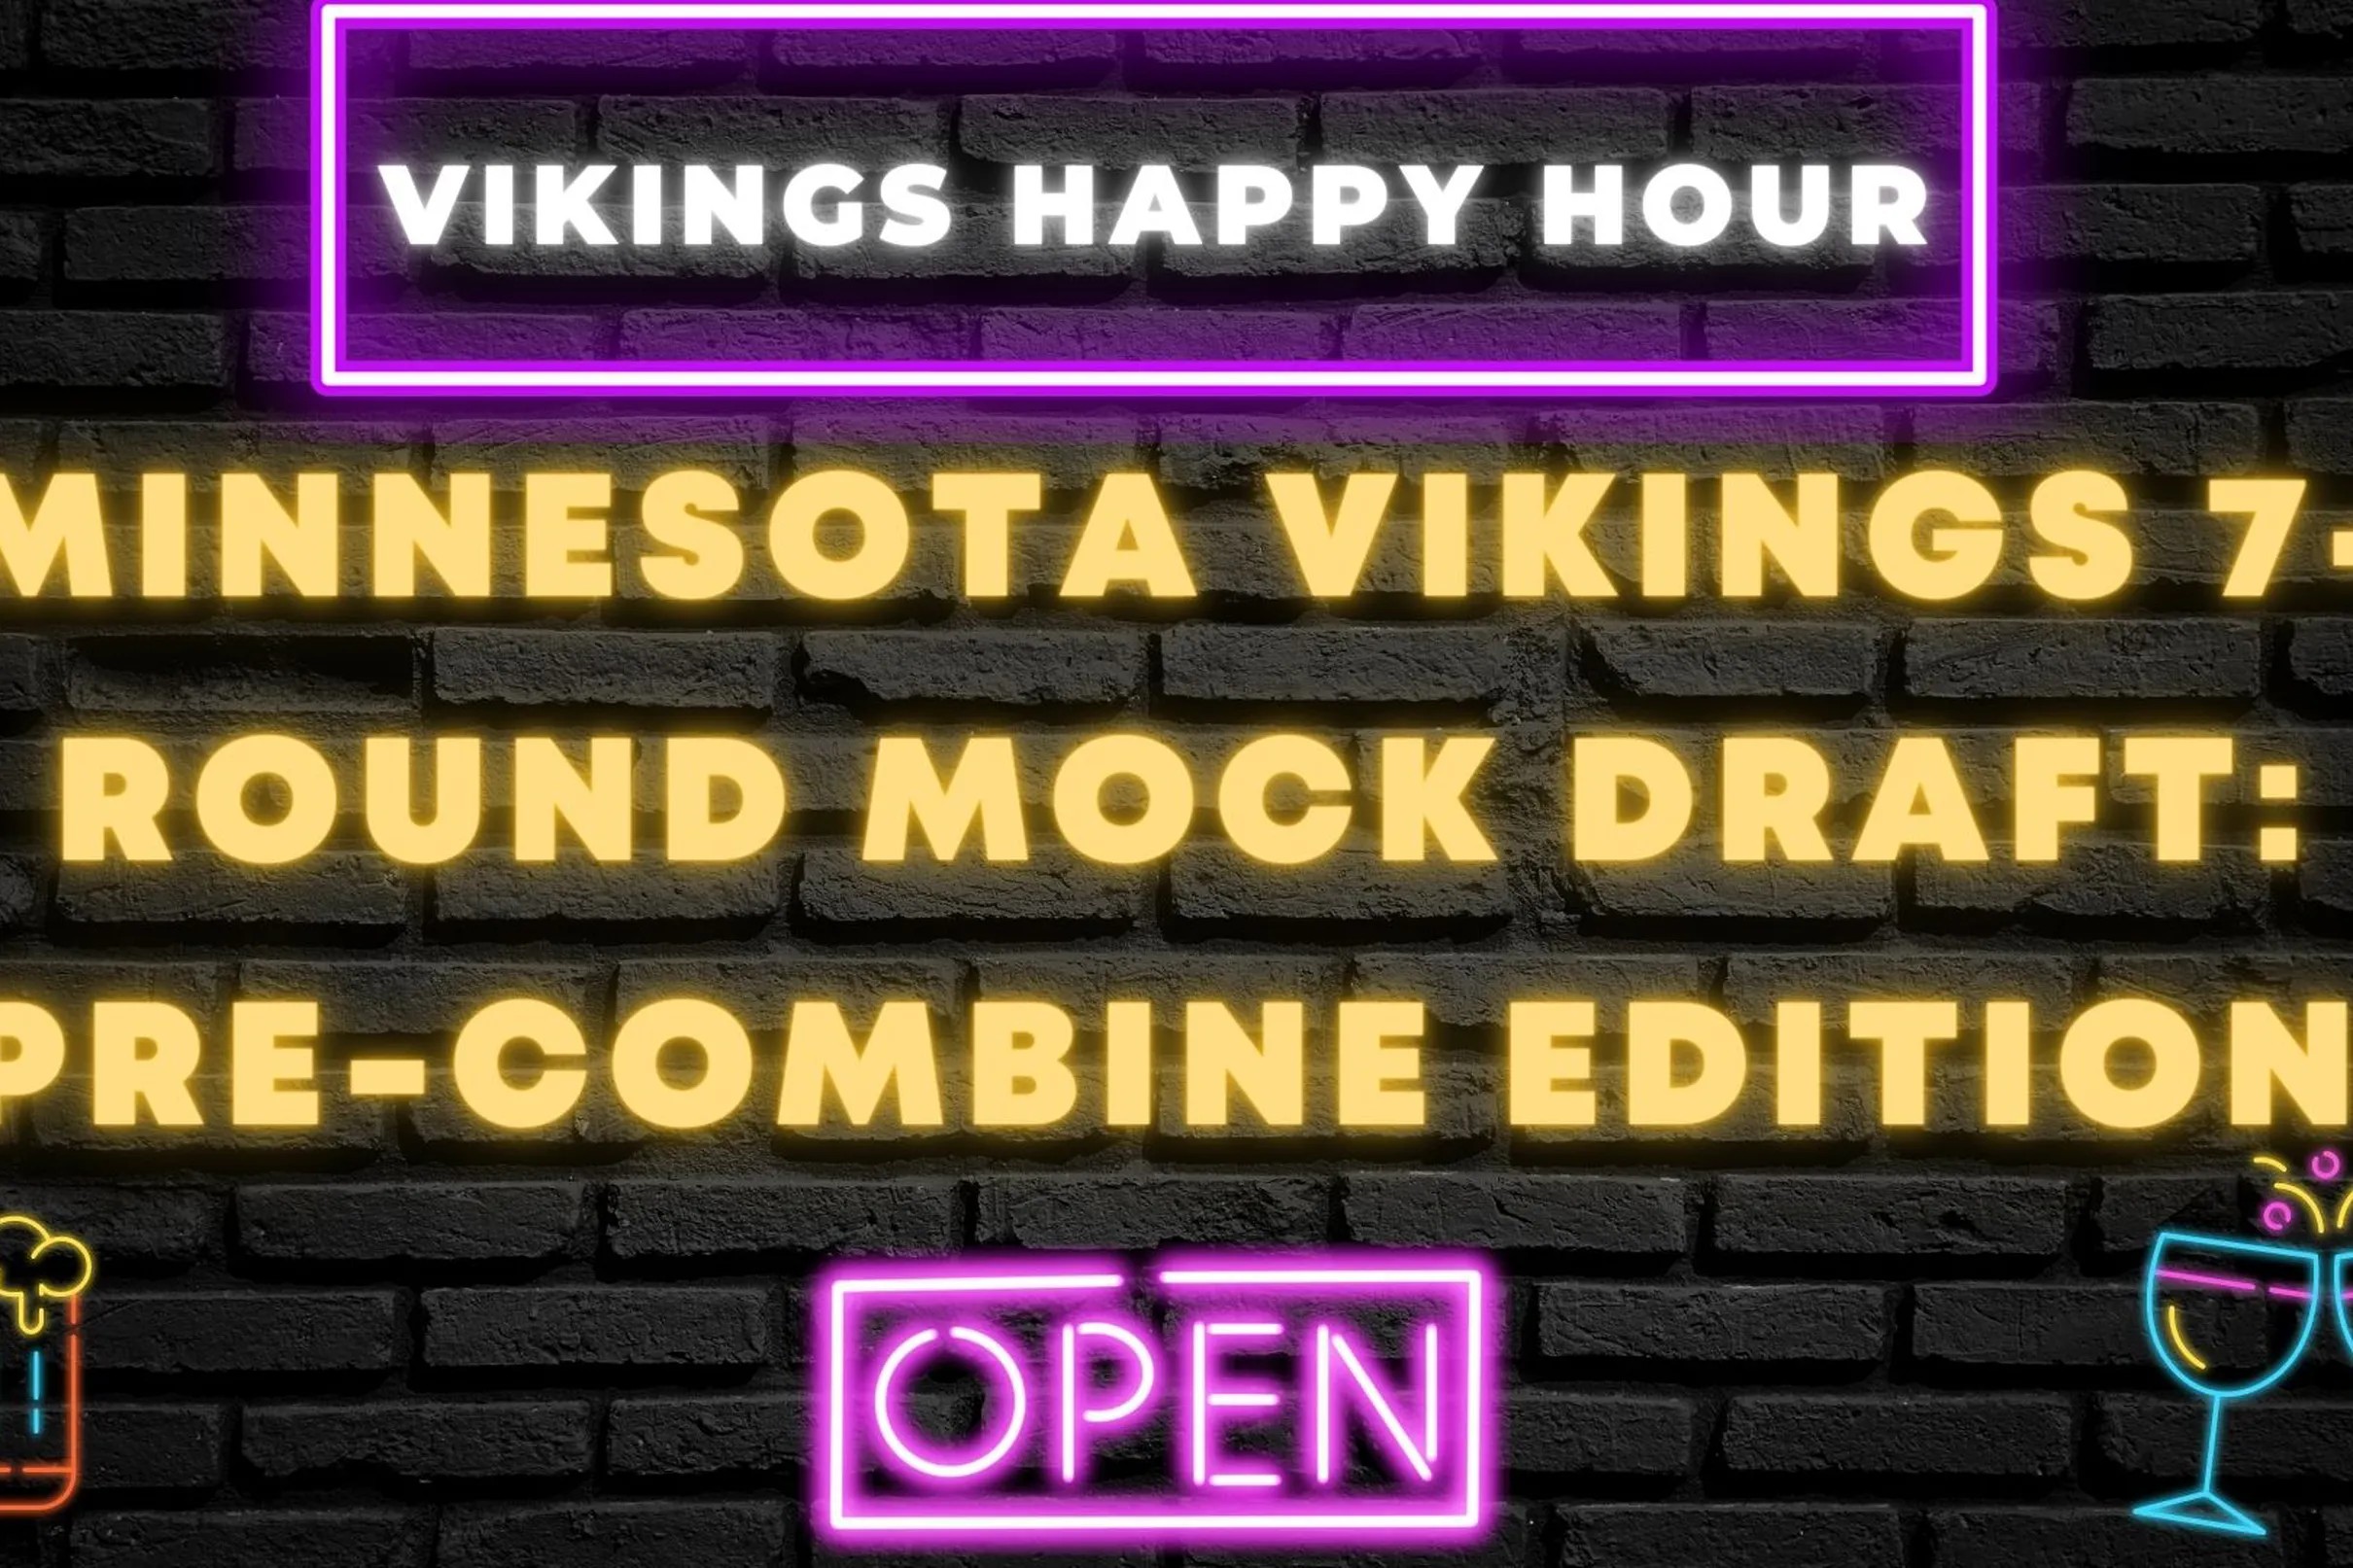 Vikings Happy Hour Minnesota Vikings 7Round mock draft